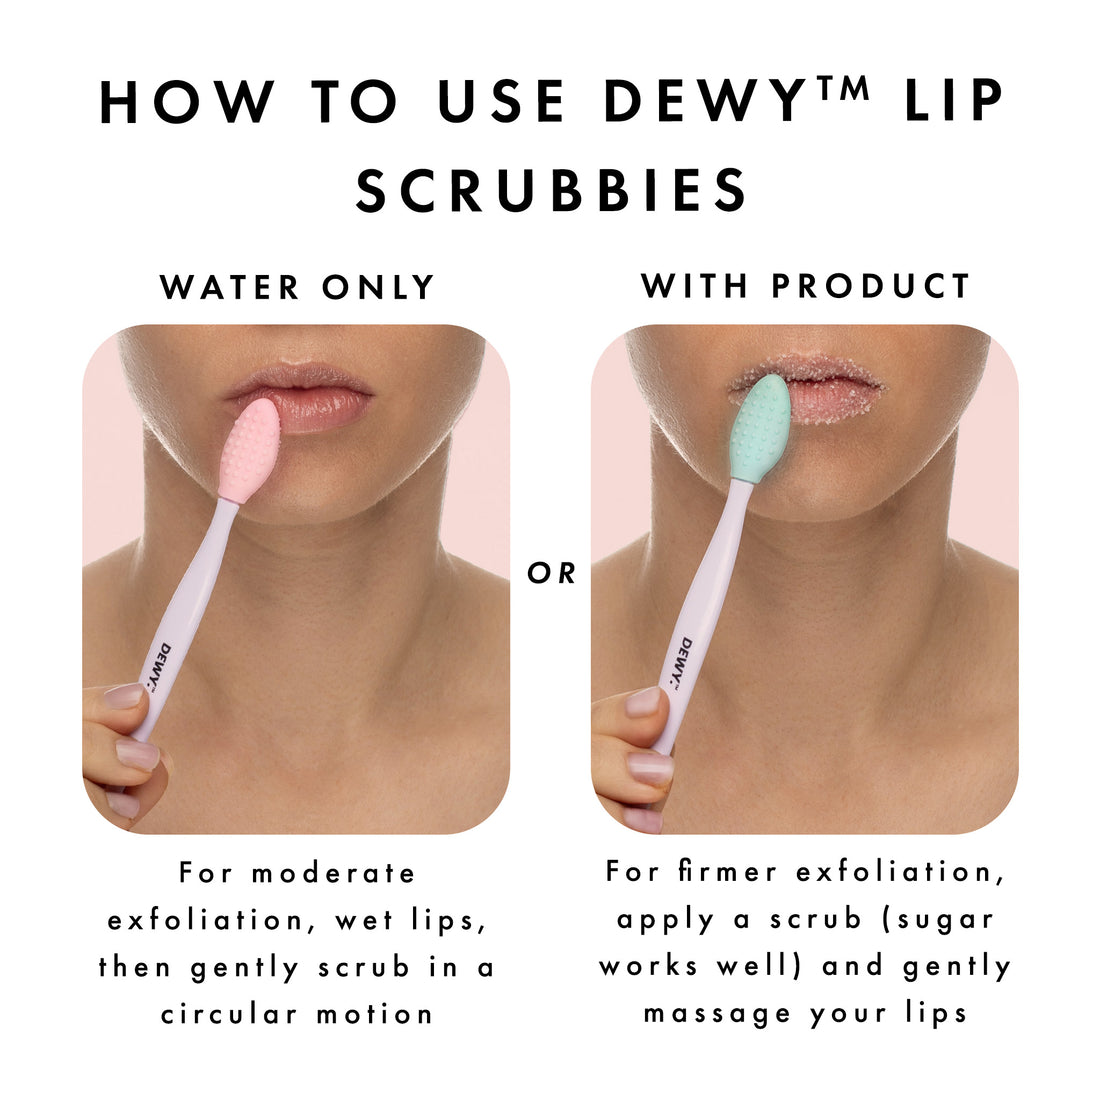 Lip Scrubbies (2-Piece Set)